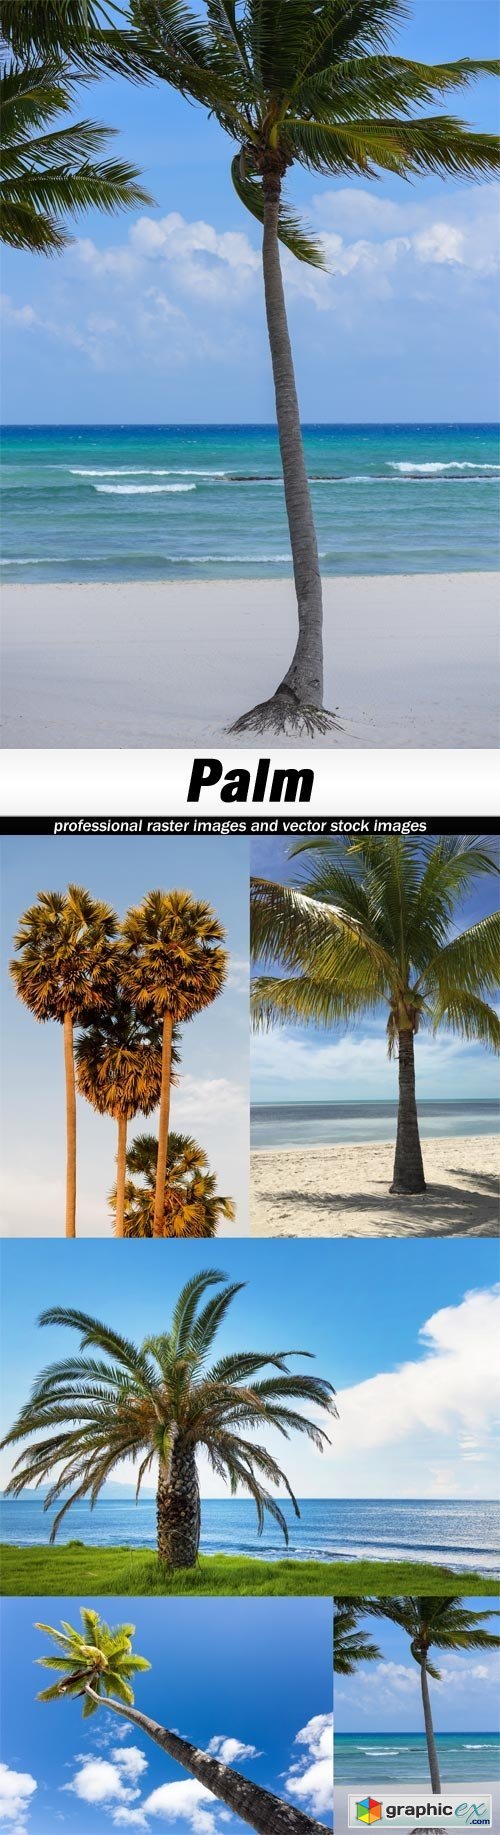 Palm-5xJPEGs